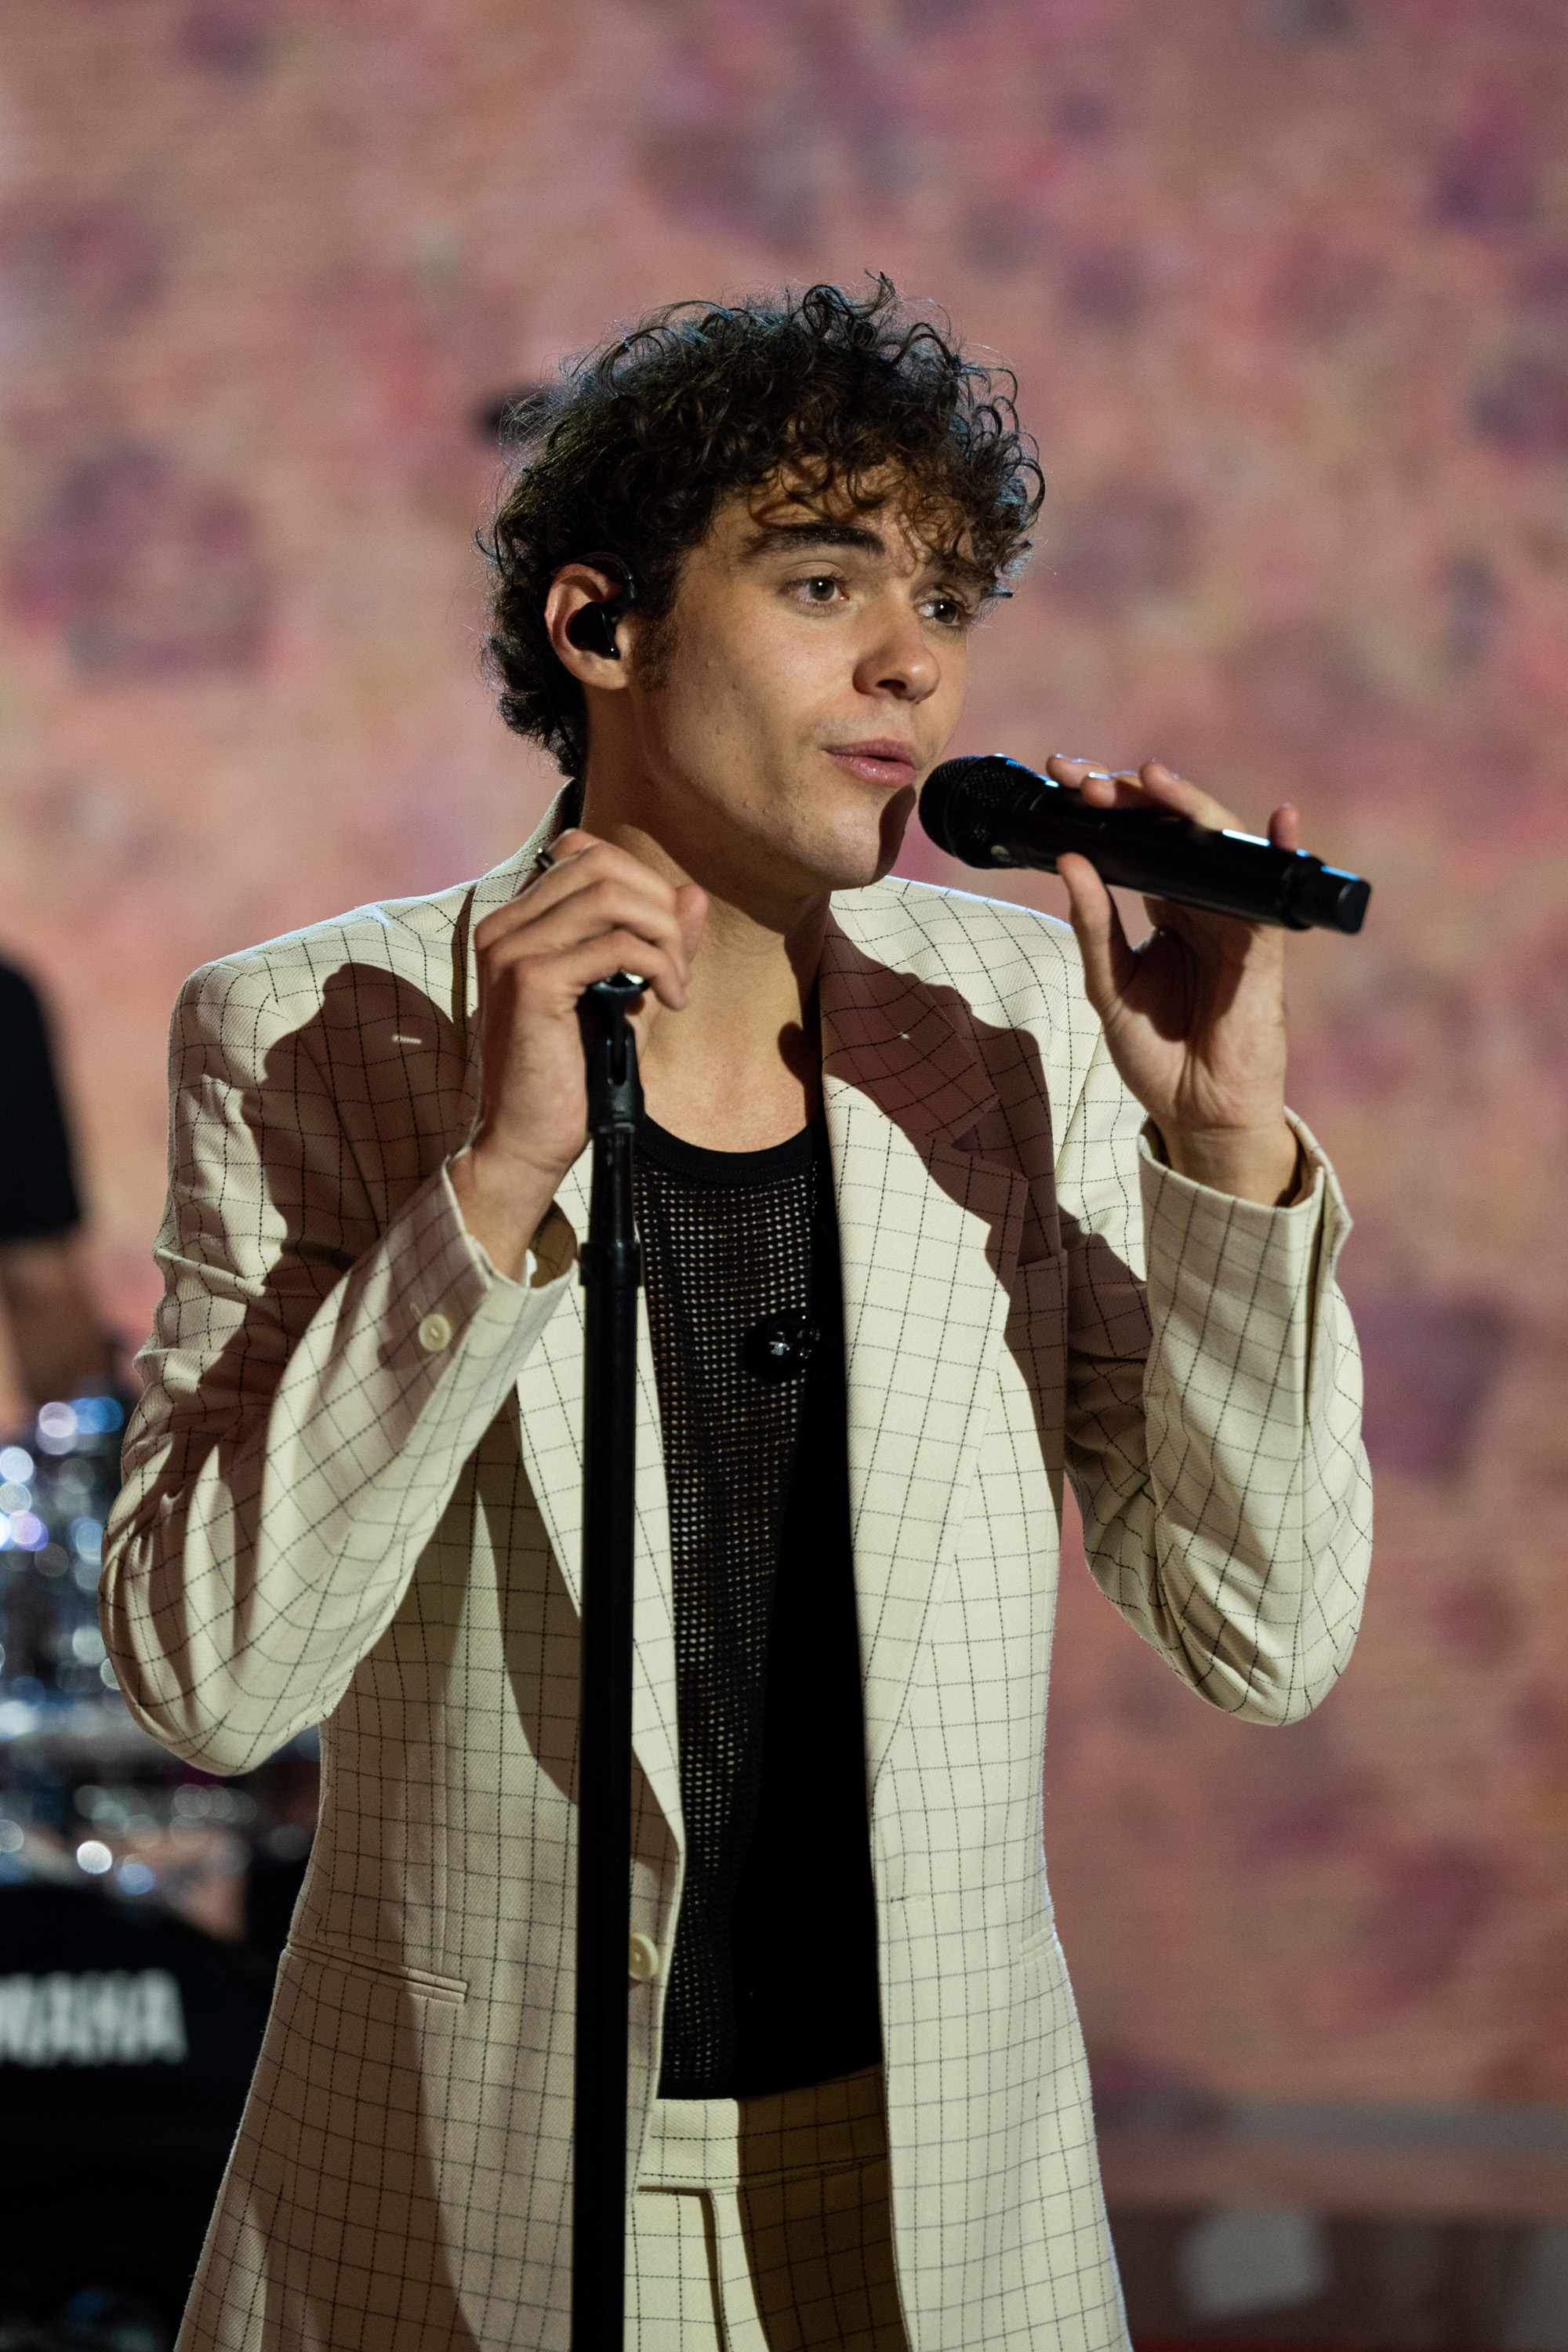 closeup of Joshua singing into a mic